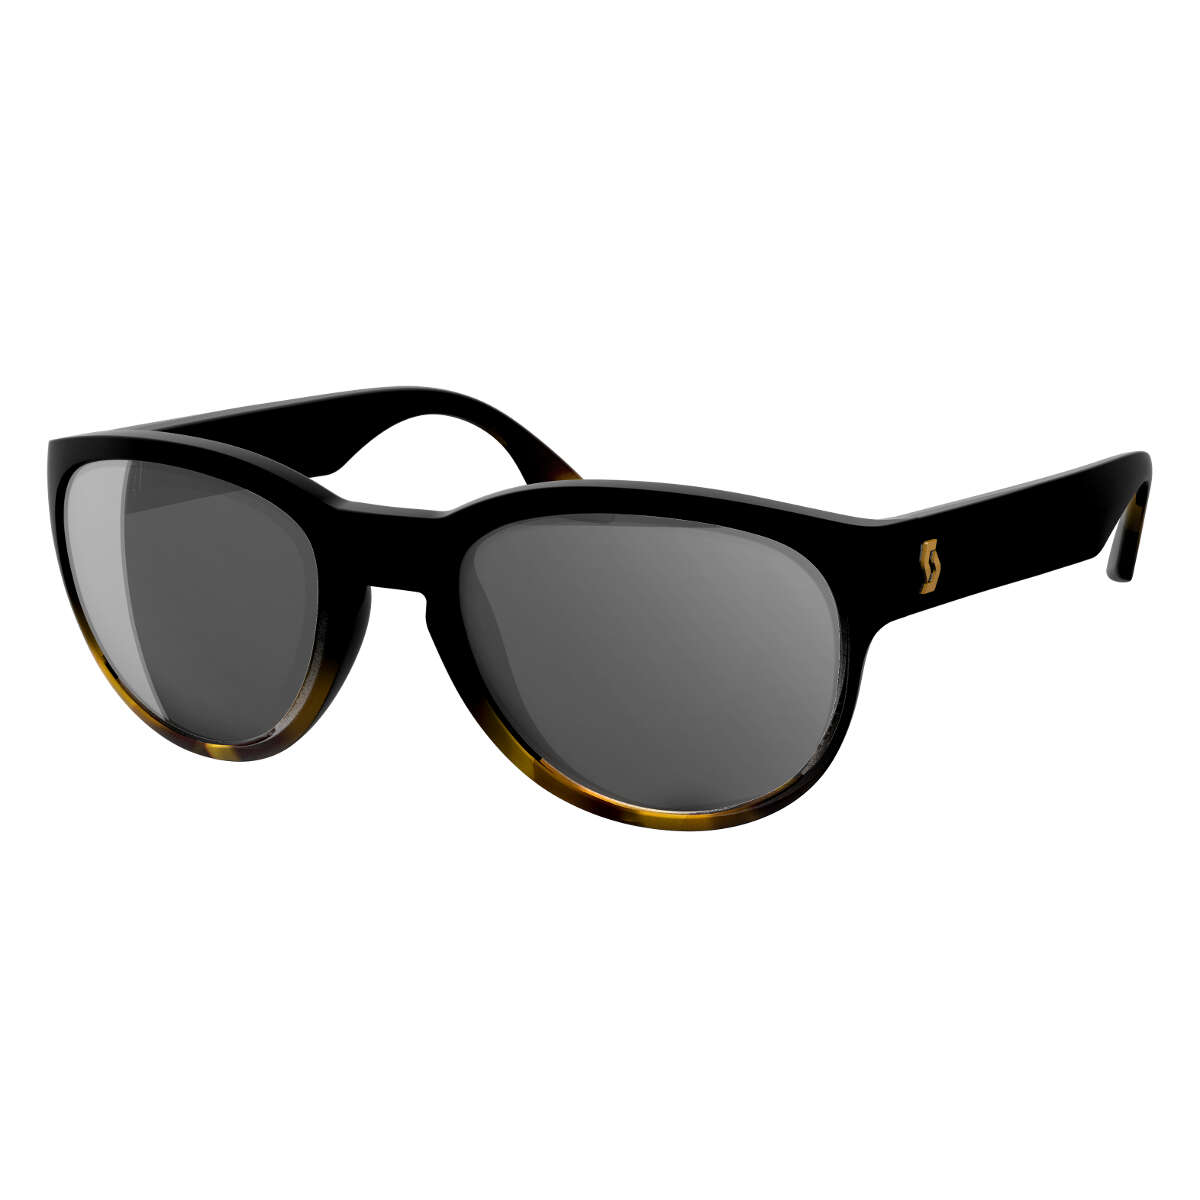 Scott Sunglasses Sway Black/Gold - Grey